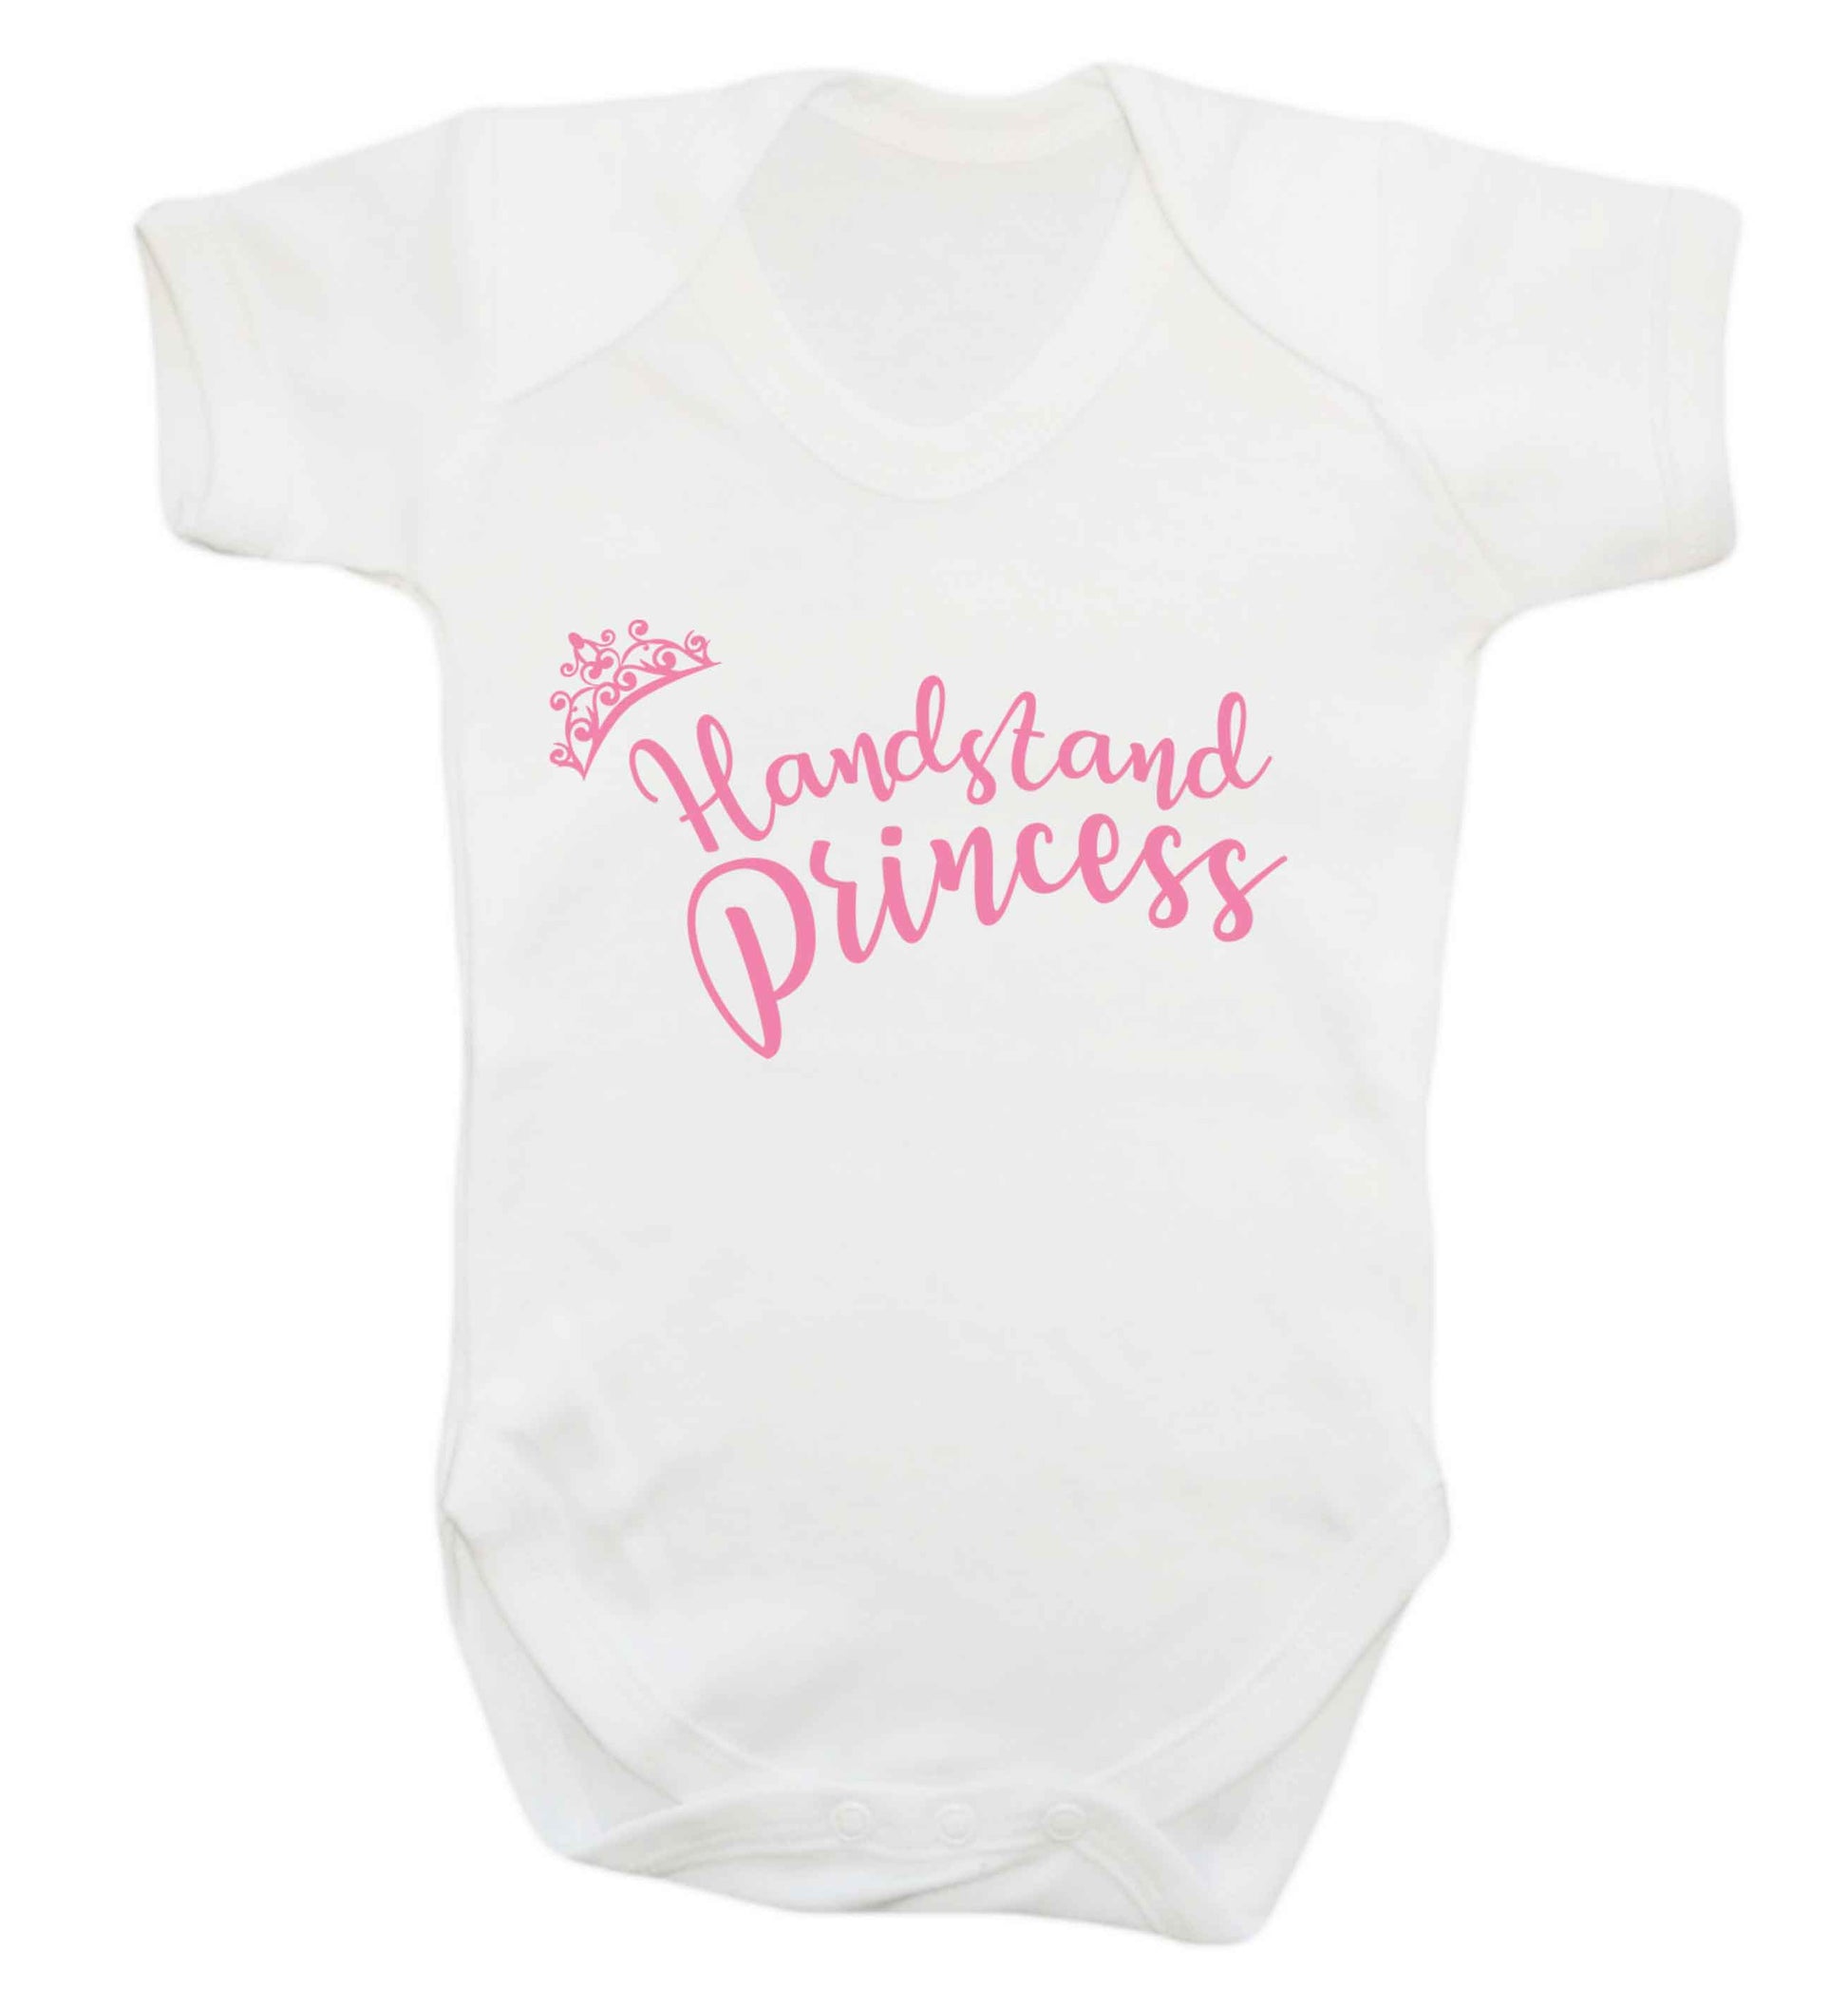 Handstand princess Baby Vest white 18-24 months